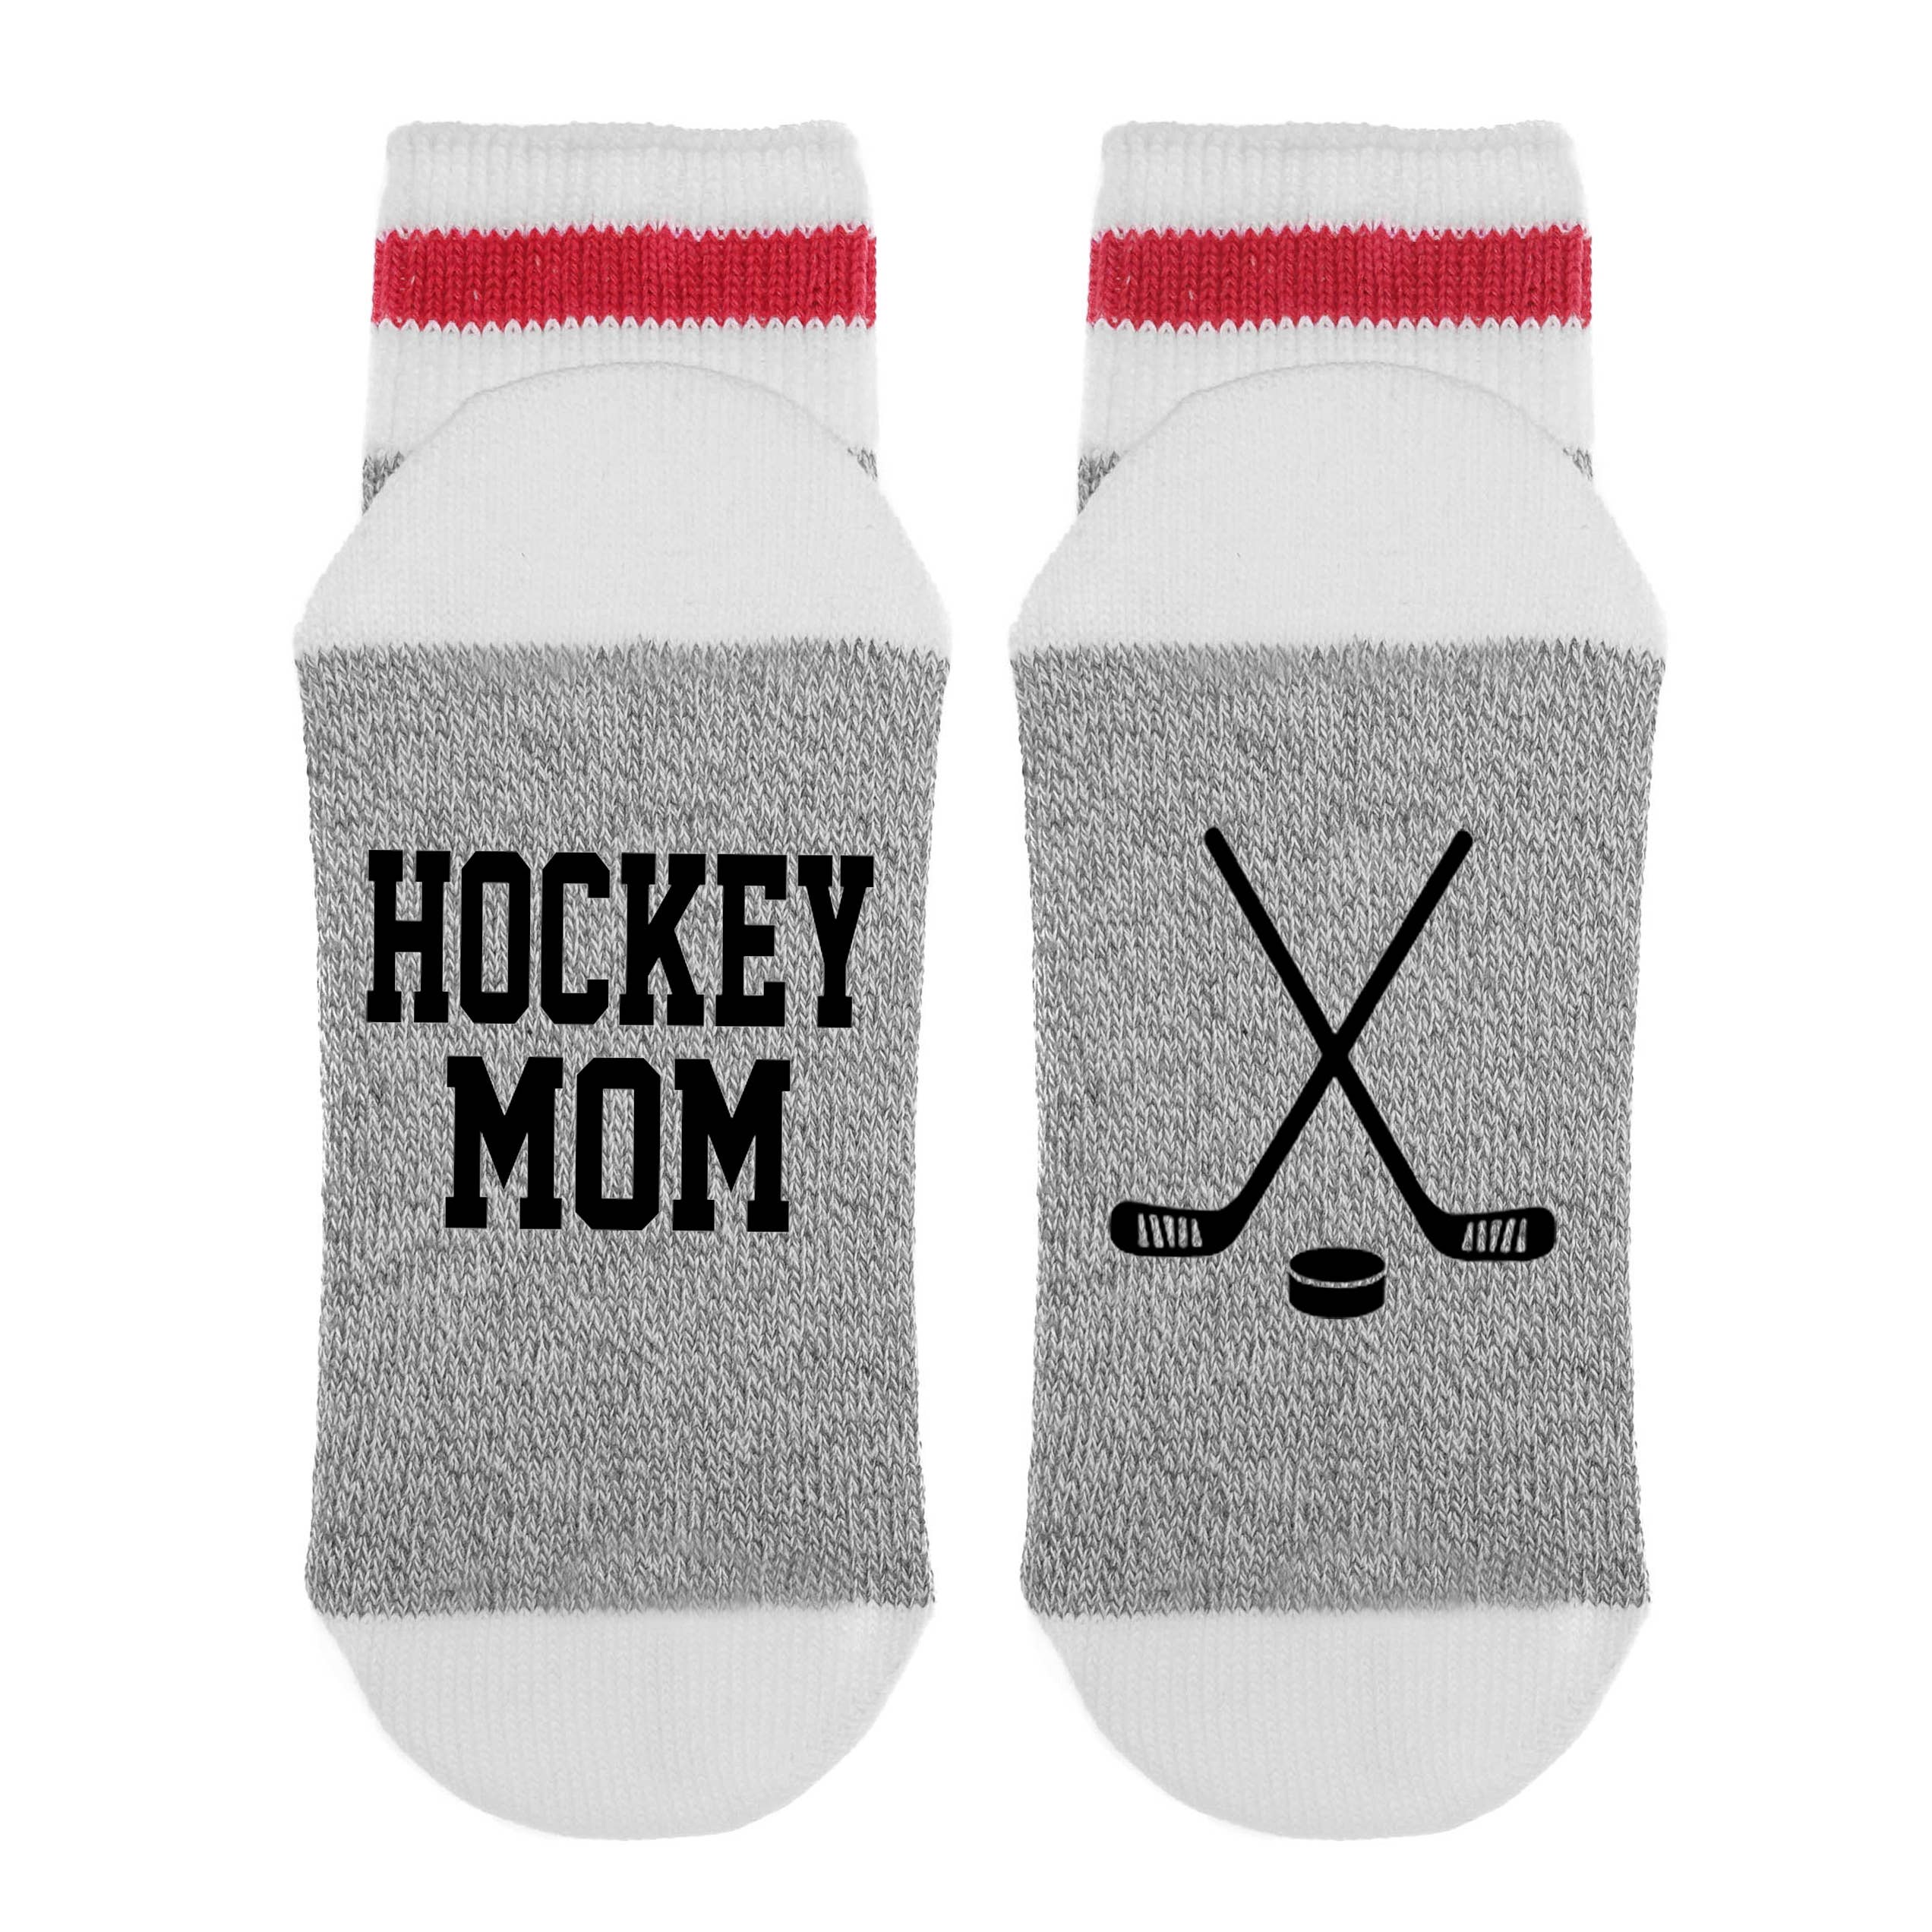 Sock Dirty to me "Hockey Mom"